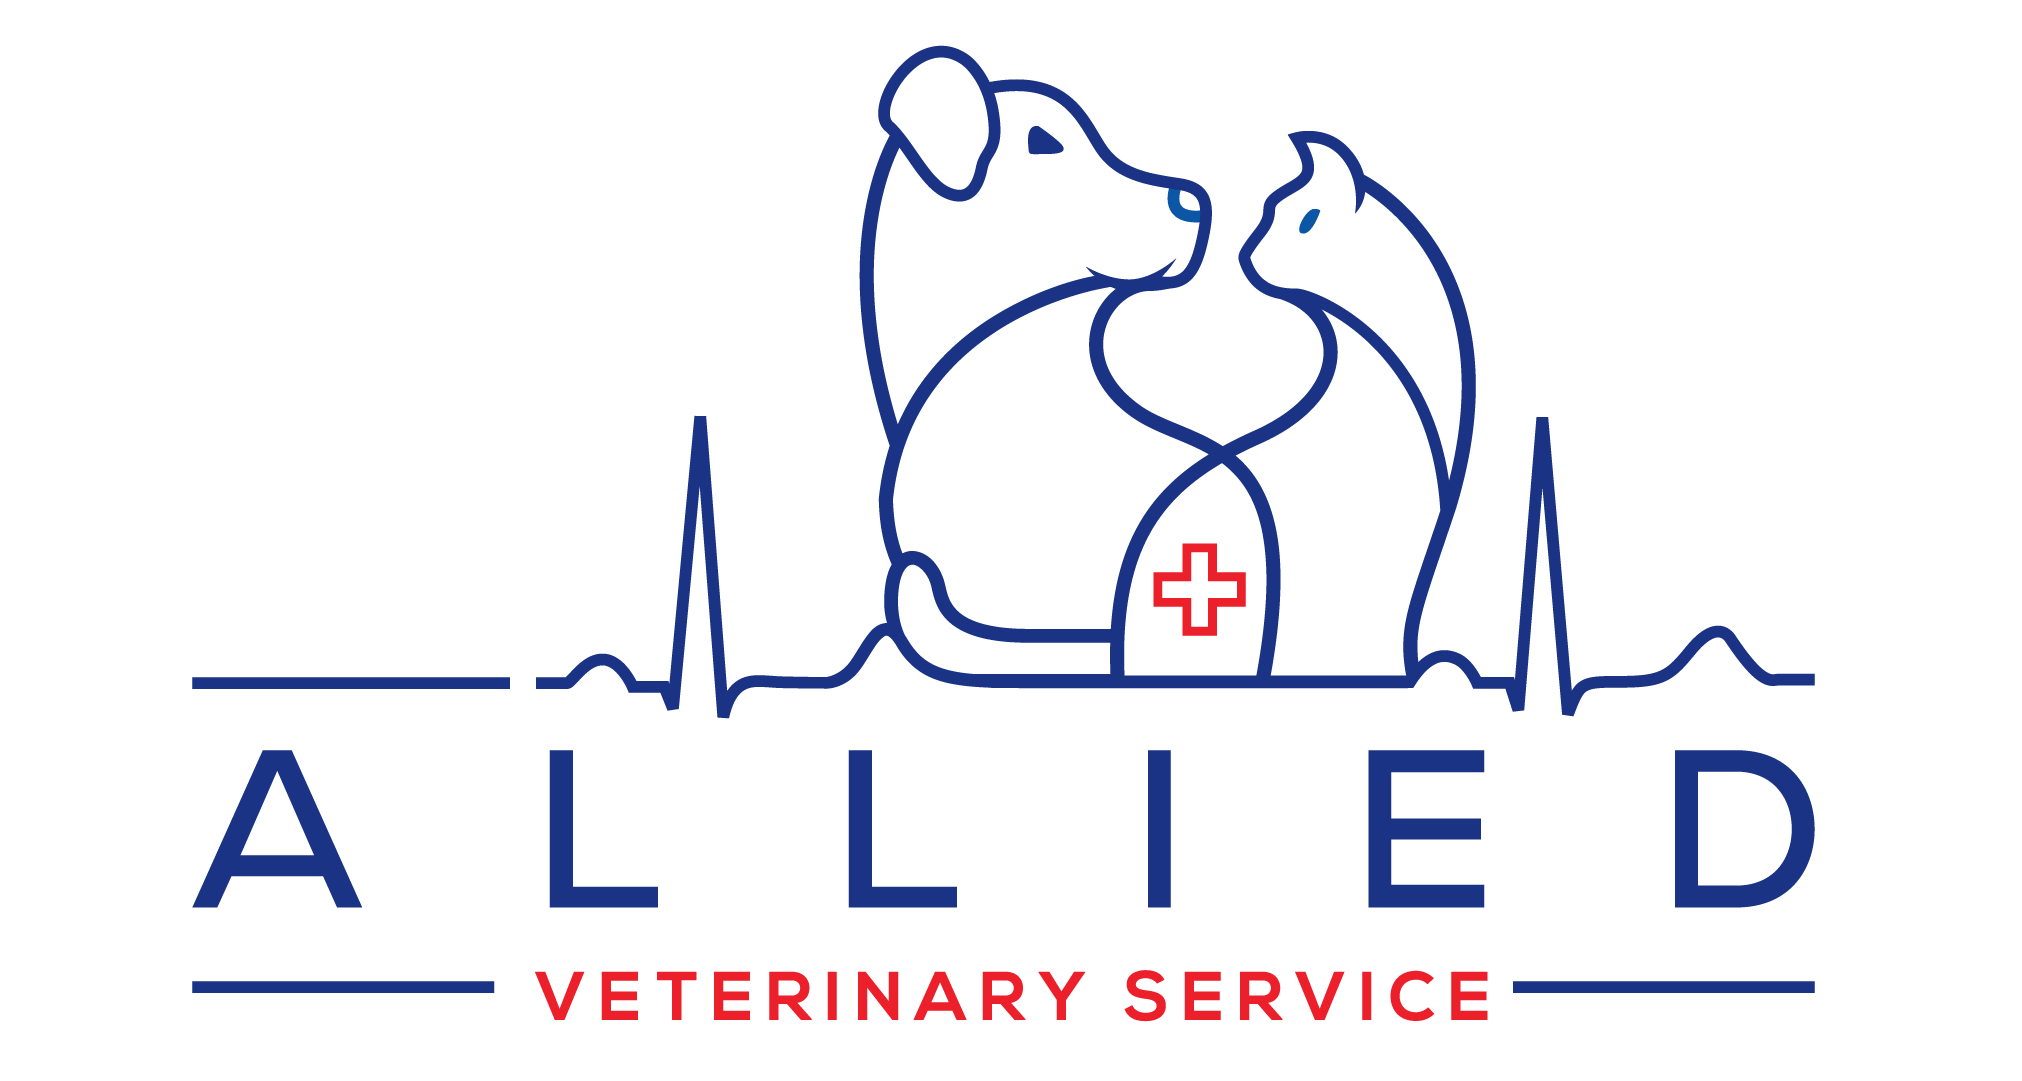 Allied Veterinary Service